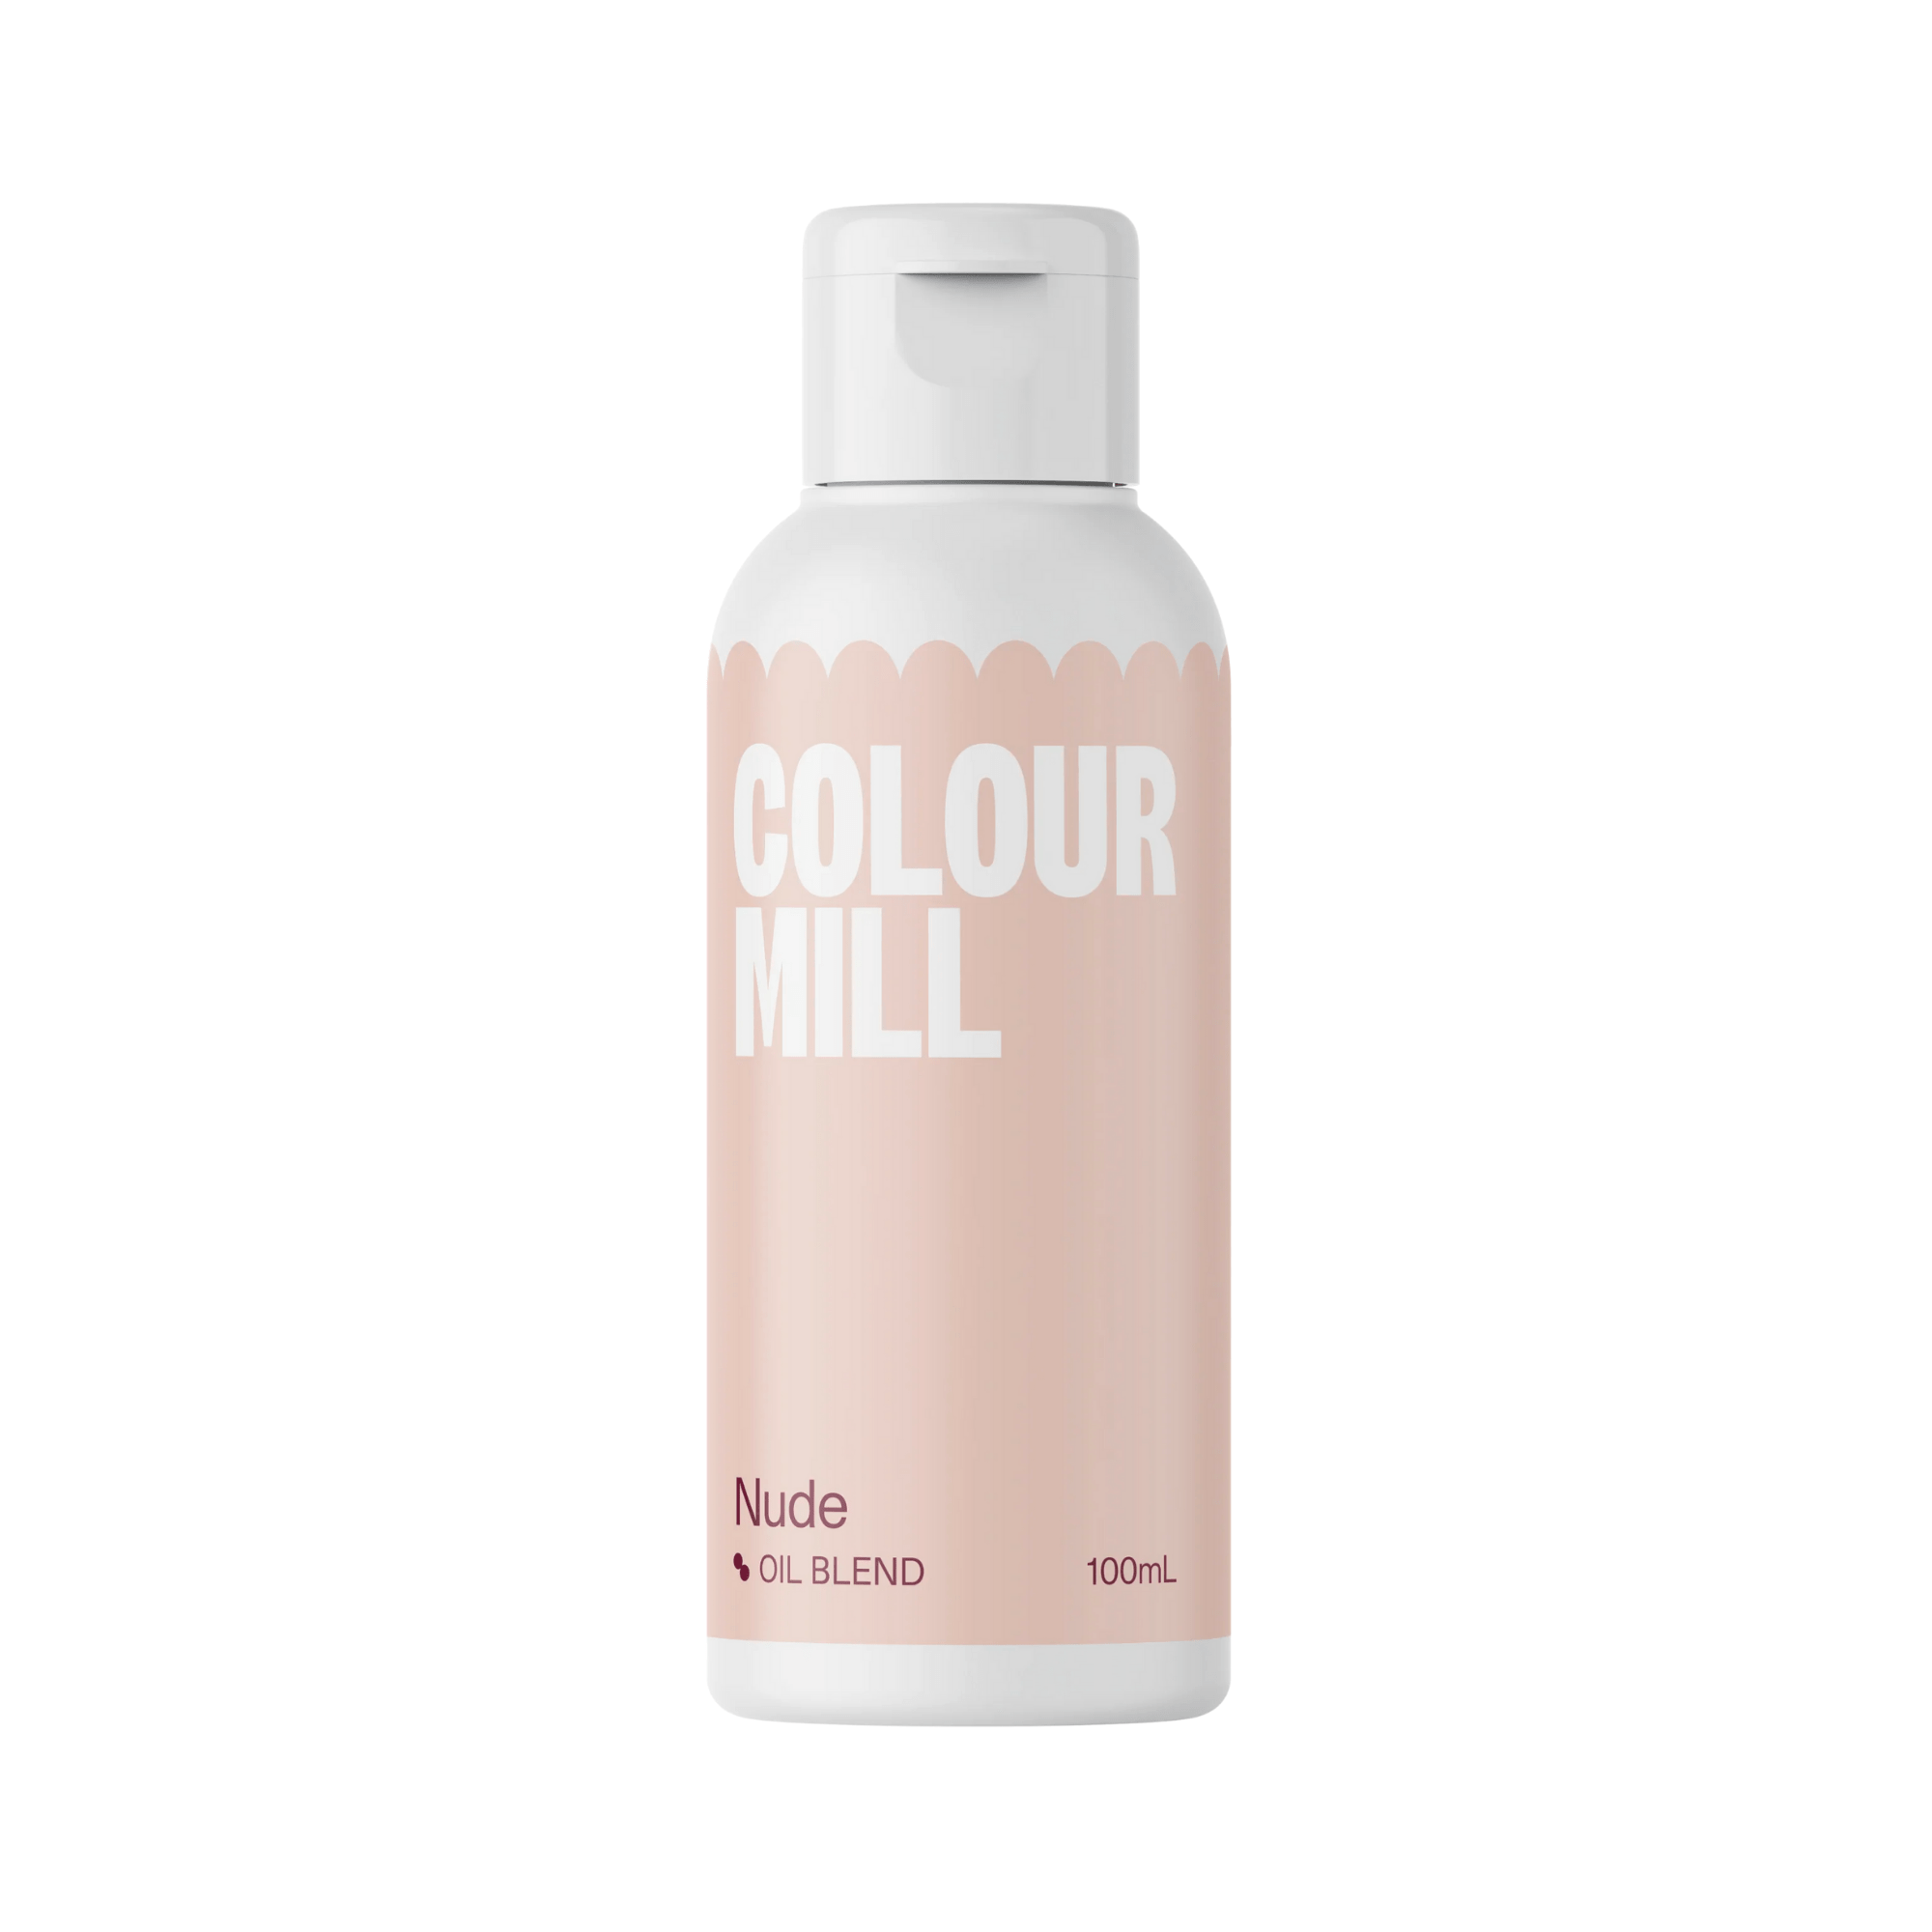 Happy Sprinkles Streusel 100ml Colour Mill Nude - Oil Blend